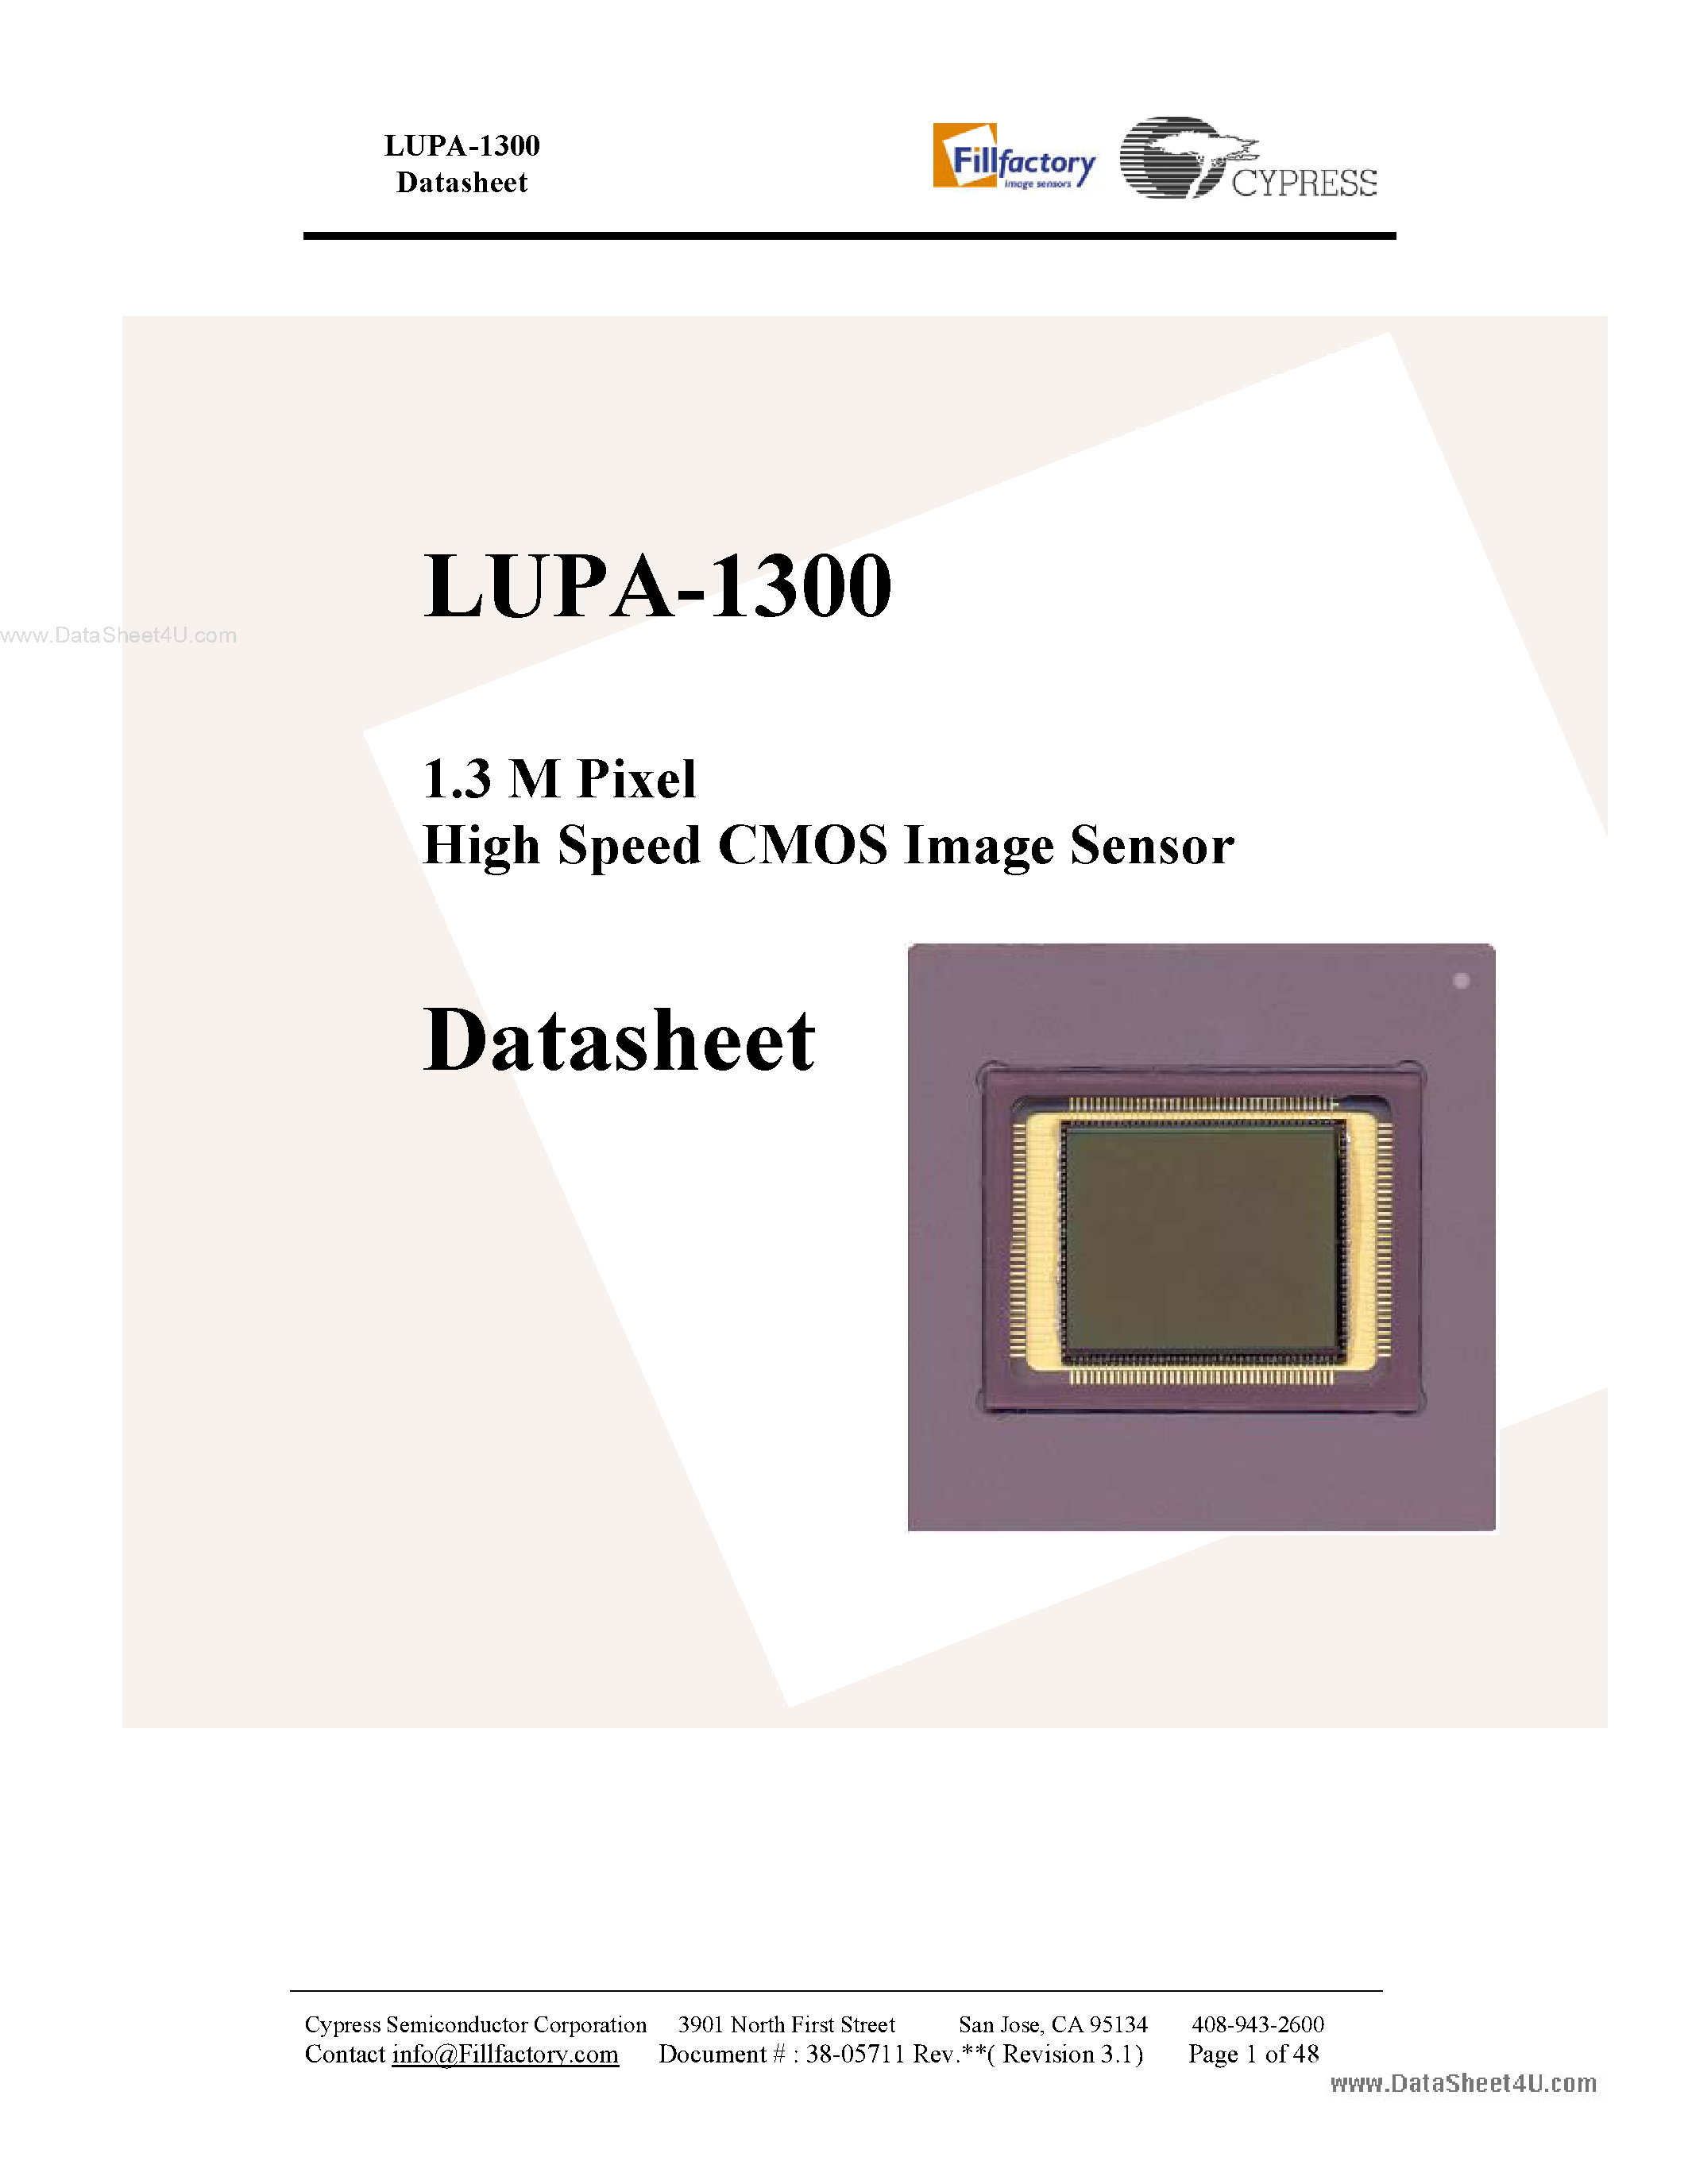 Даташит LUPA-1300 - 1.3 M Pixel High Speed CMOS Image Sensor страница 1